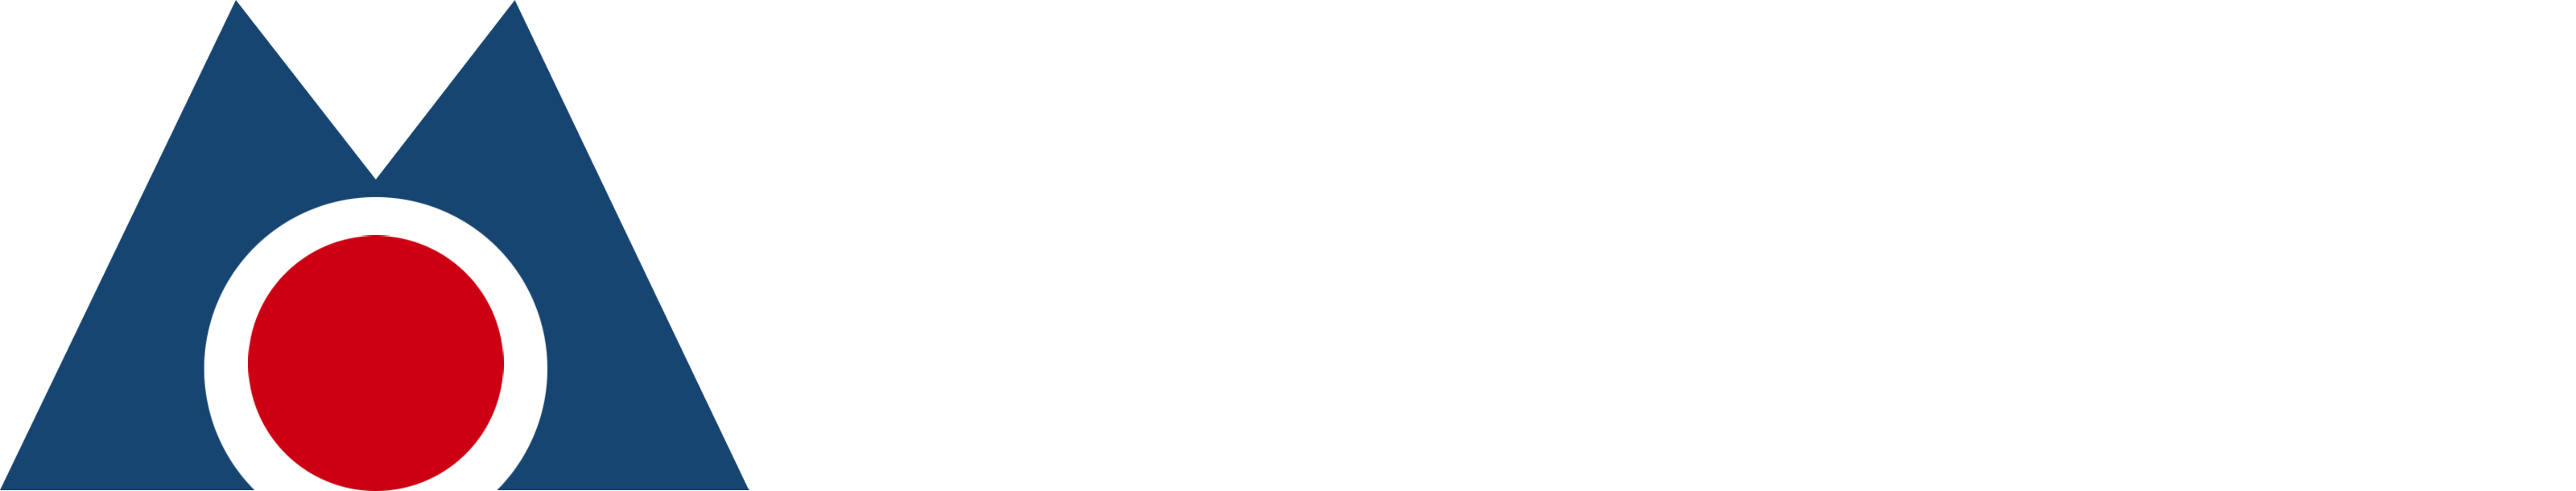 Innung-Metallbau-Feinwwerktechnik